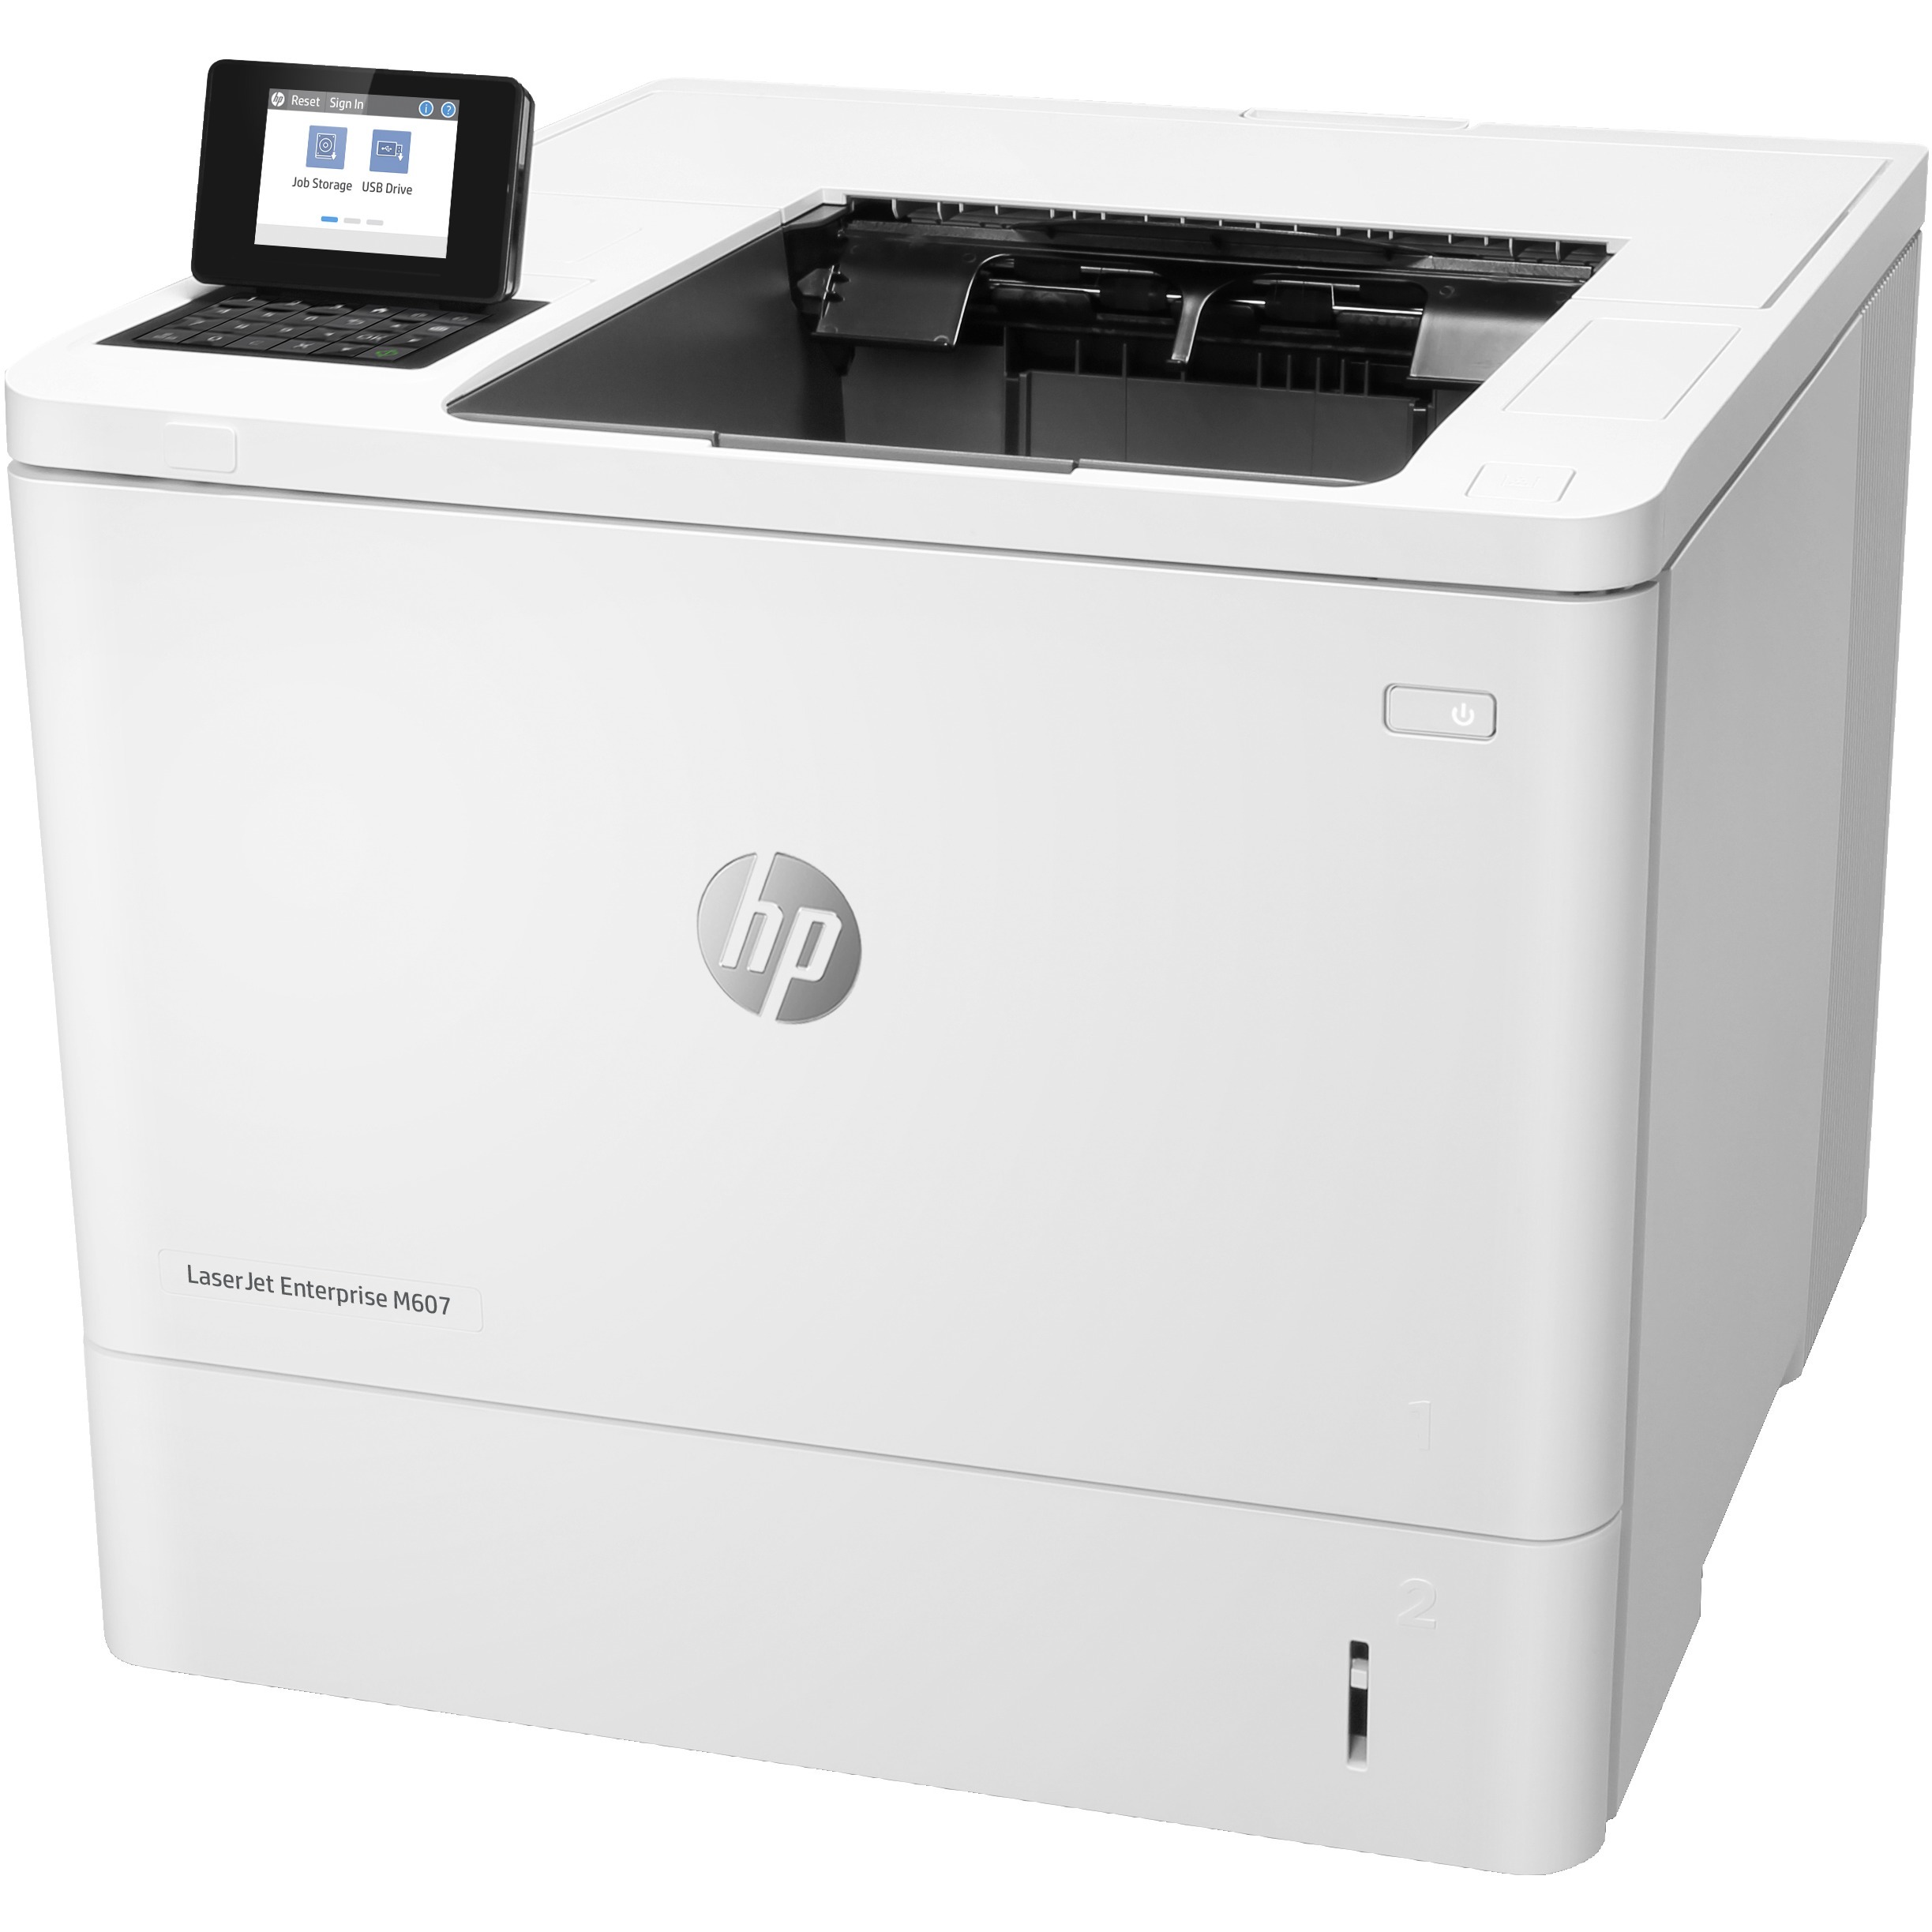 Hp Laserjet M607 M607n Desktop Laser Printer Monochrome Caretek Information Technology Solutions 3619